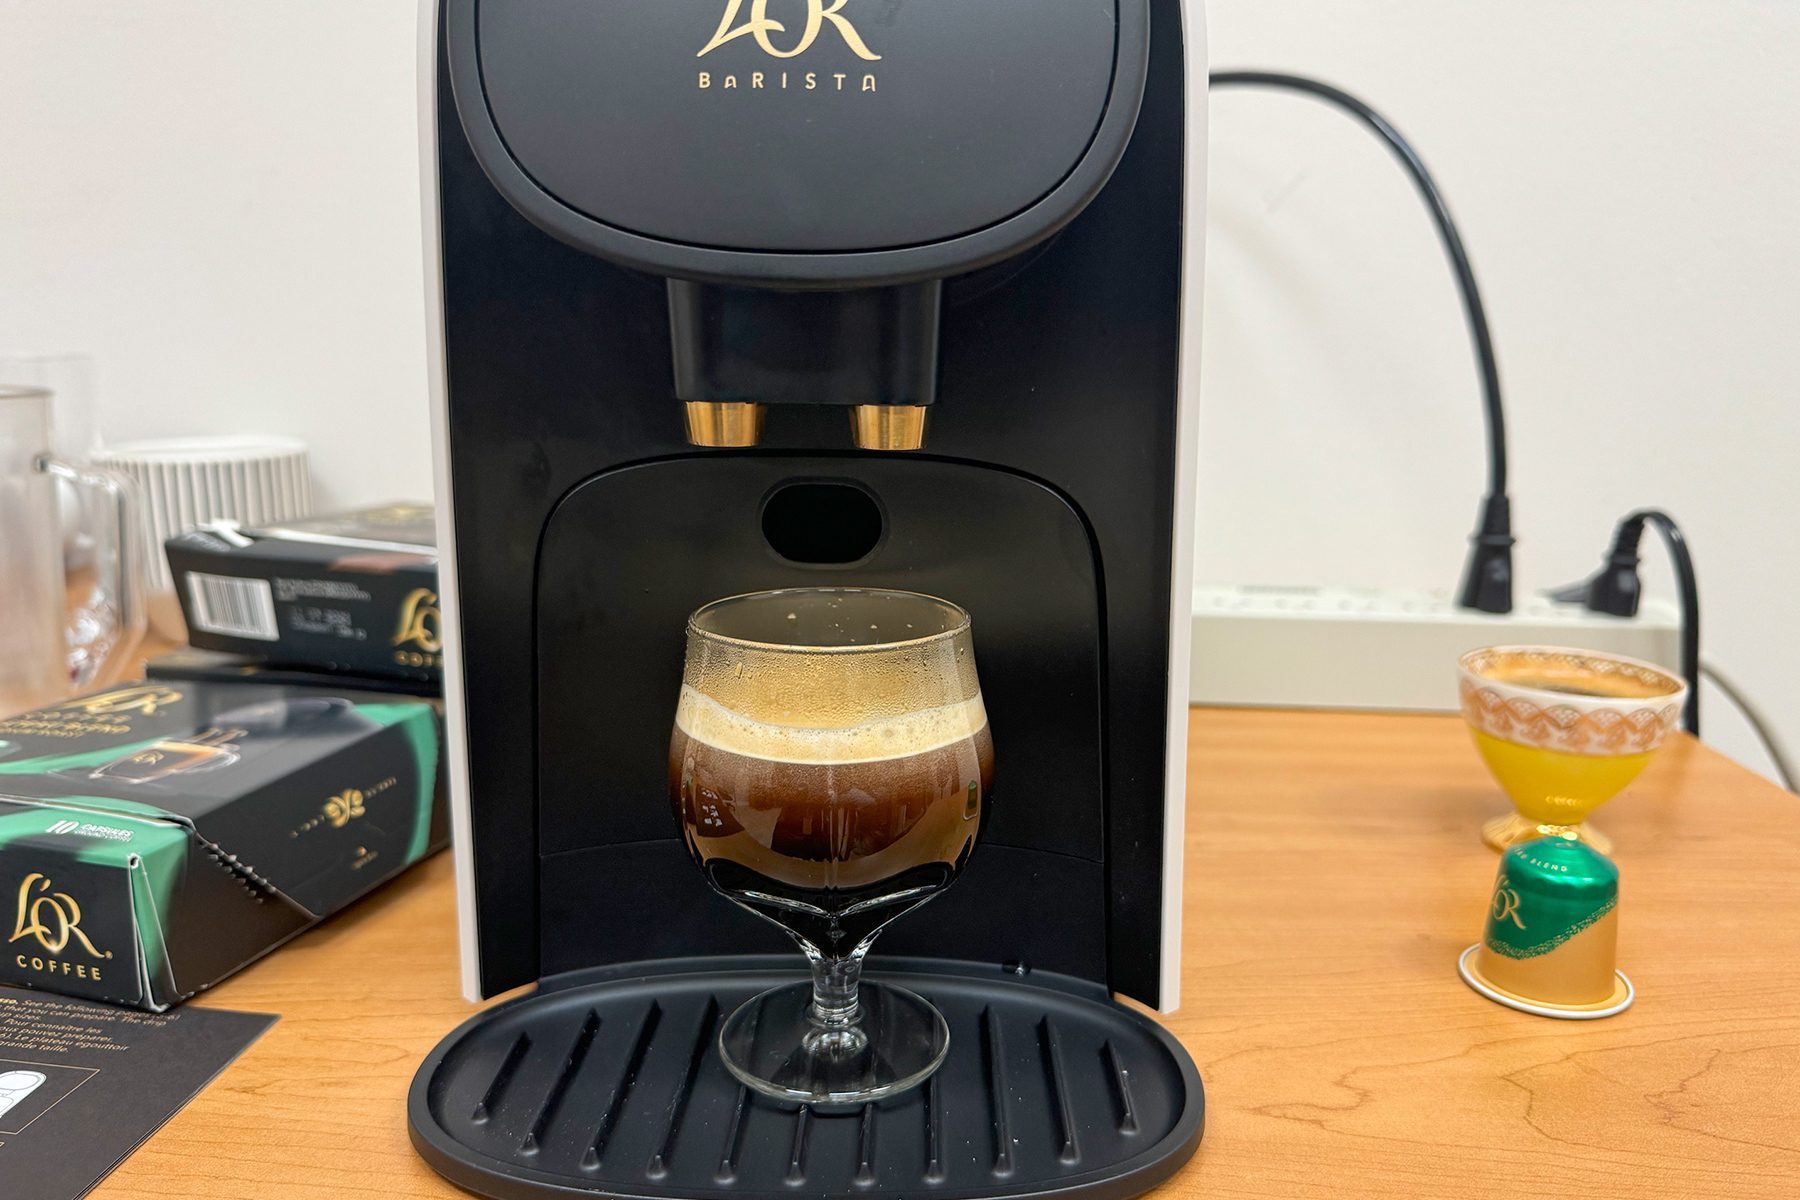 L'or Barista Coffee & Espresso System